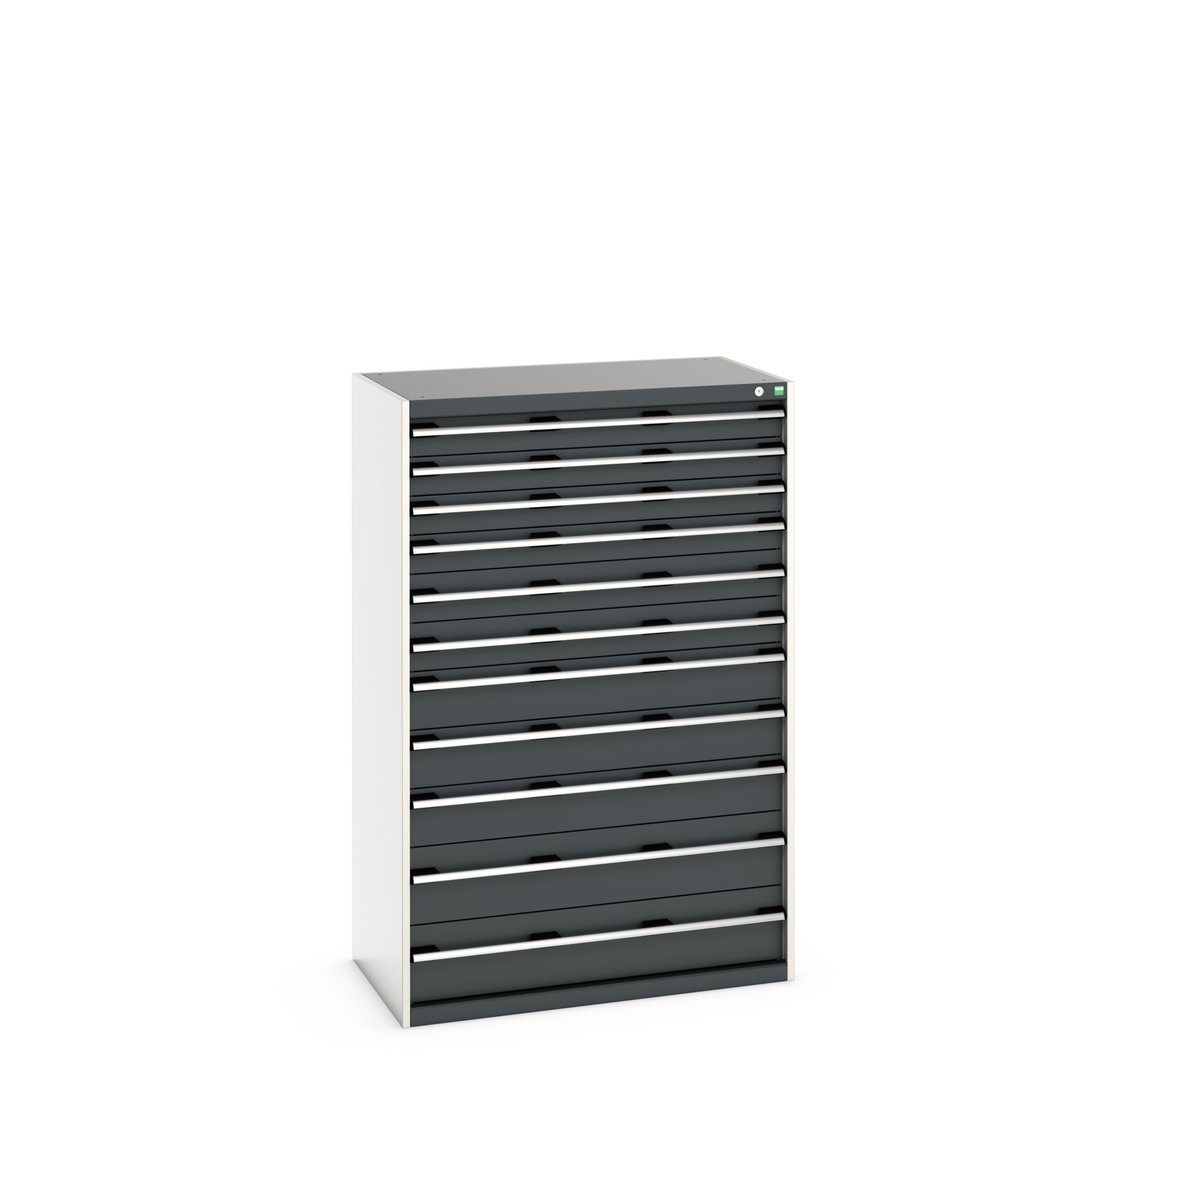 40021045. - cubio drawer cabinet